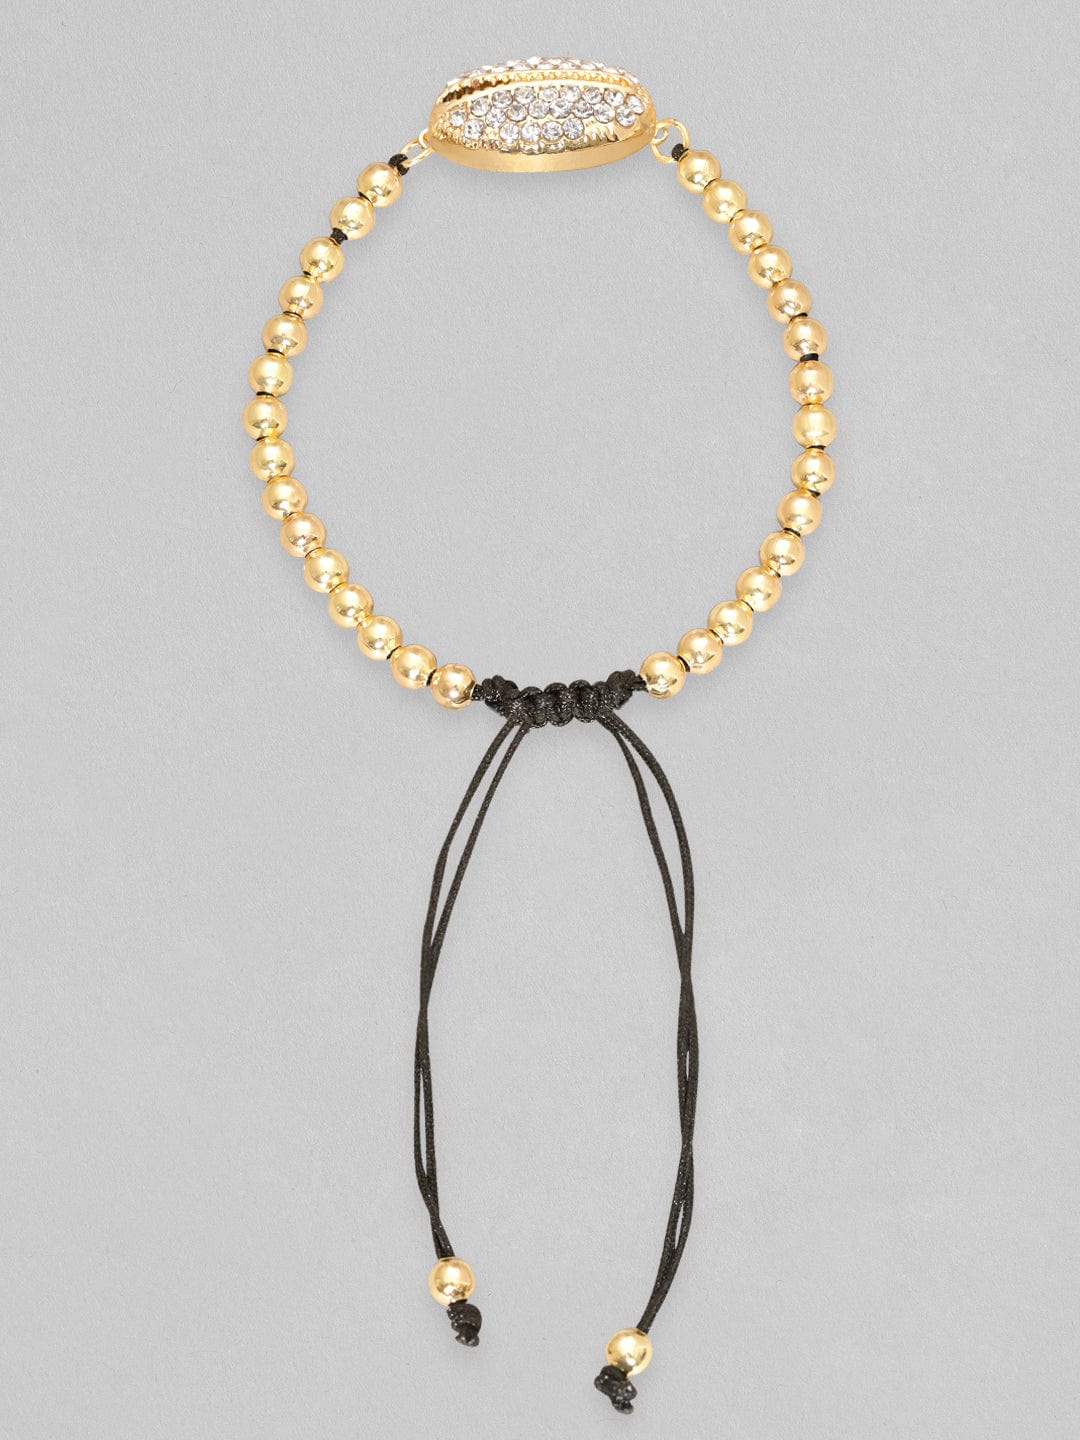 Qoo10 - 22k / 916 Gold Ball Bracelet v2 (2 Tone) : Watch & Jewelry